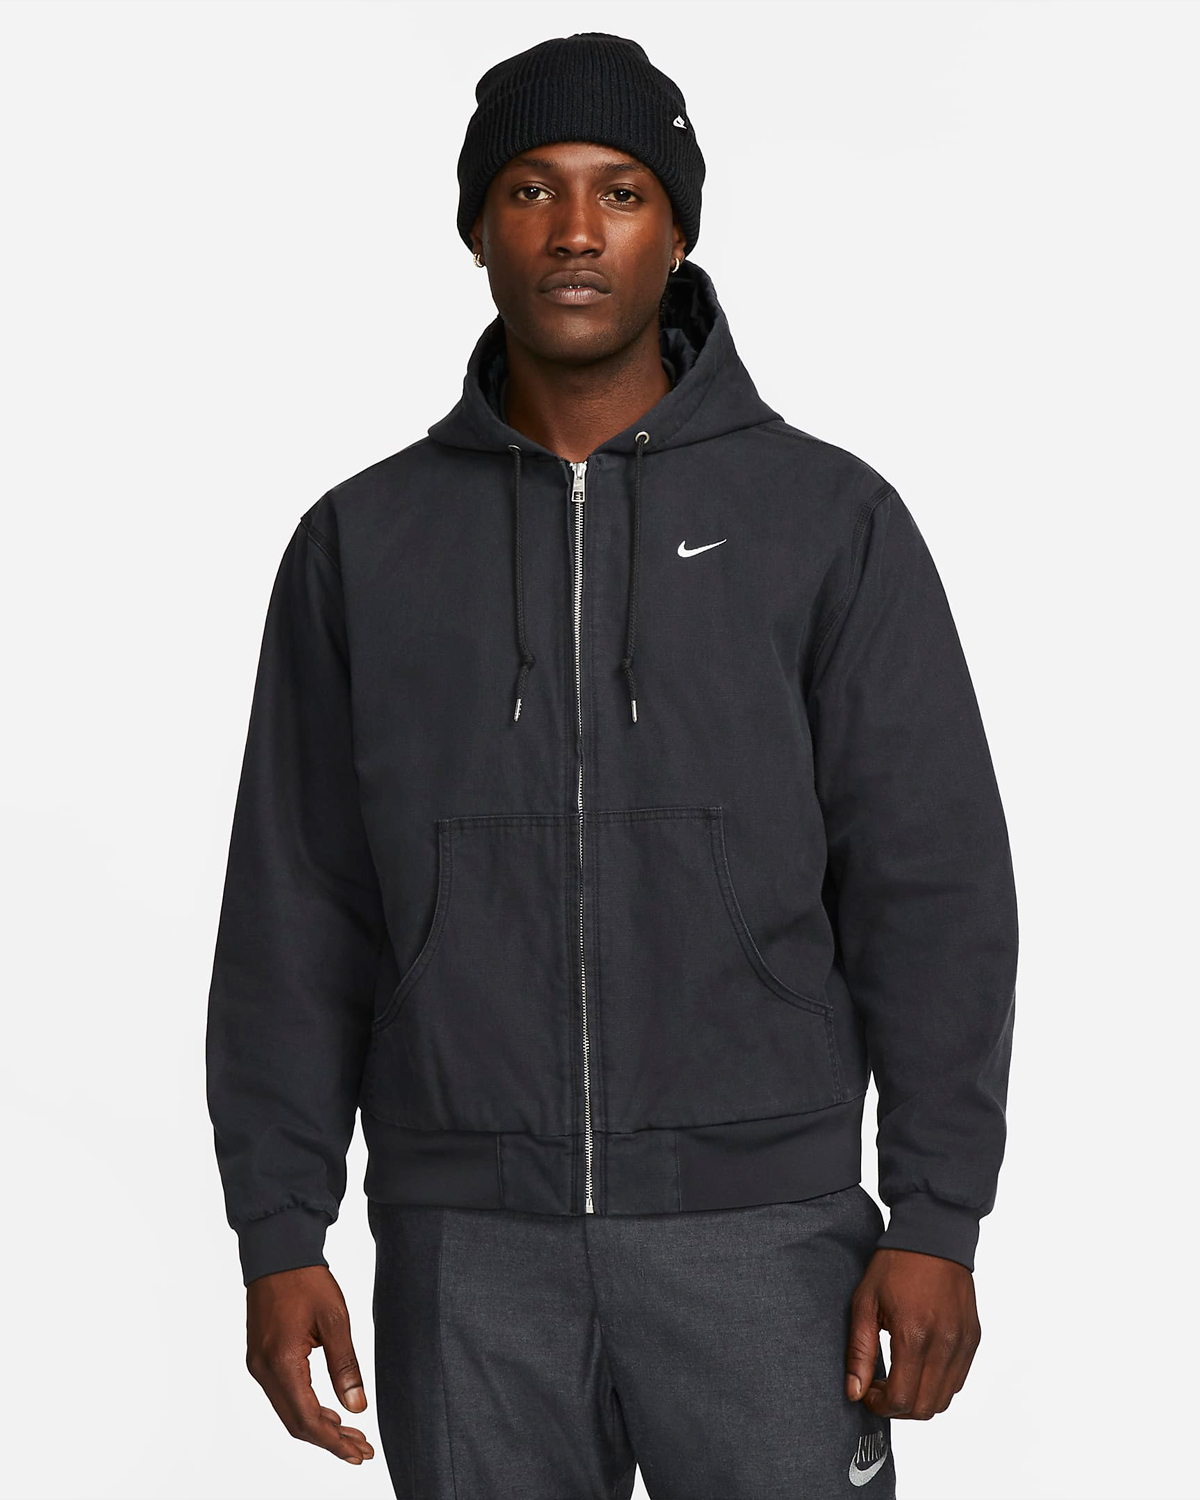 Nike-Sportswear-Padded-Hooded-Jacket-Black-White